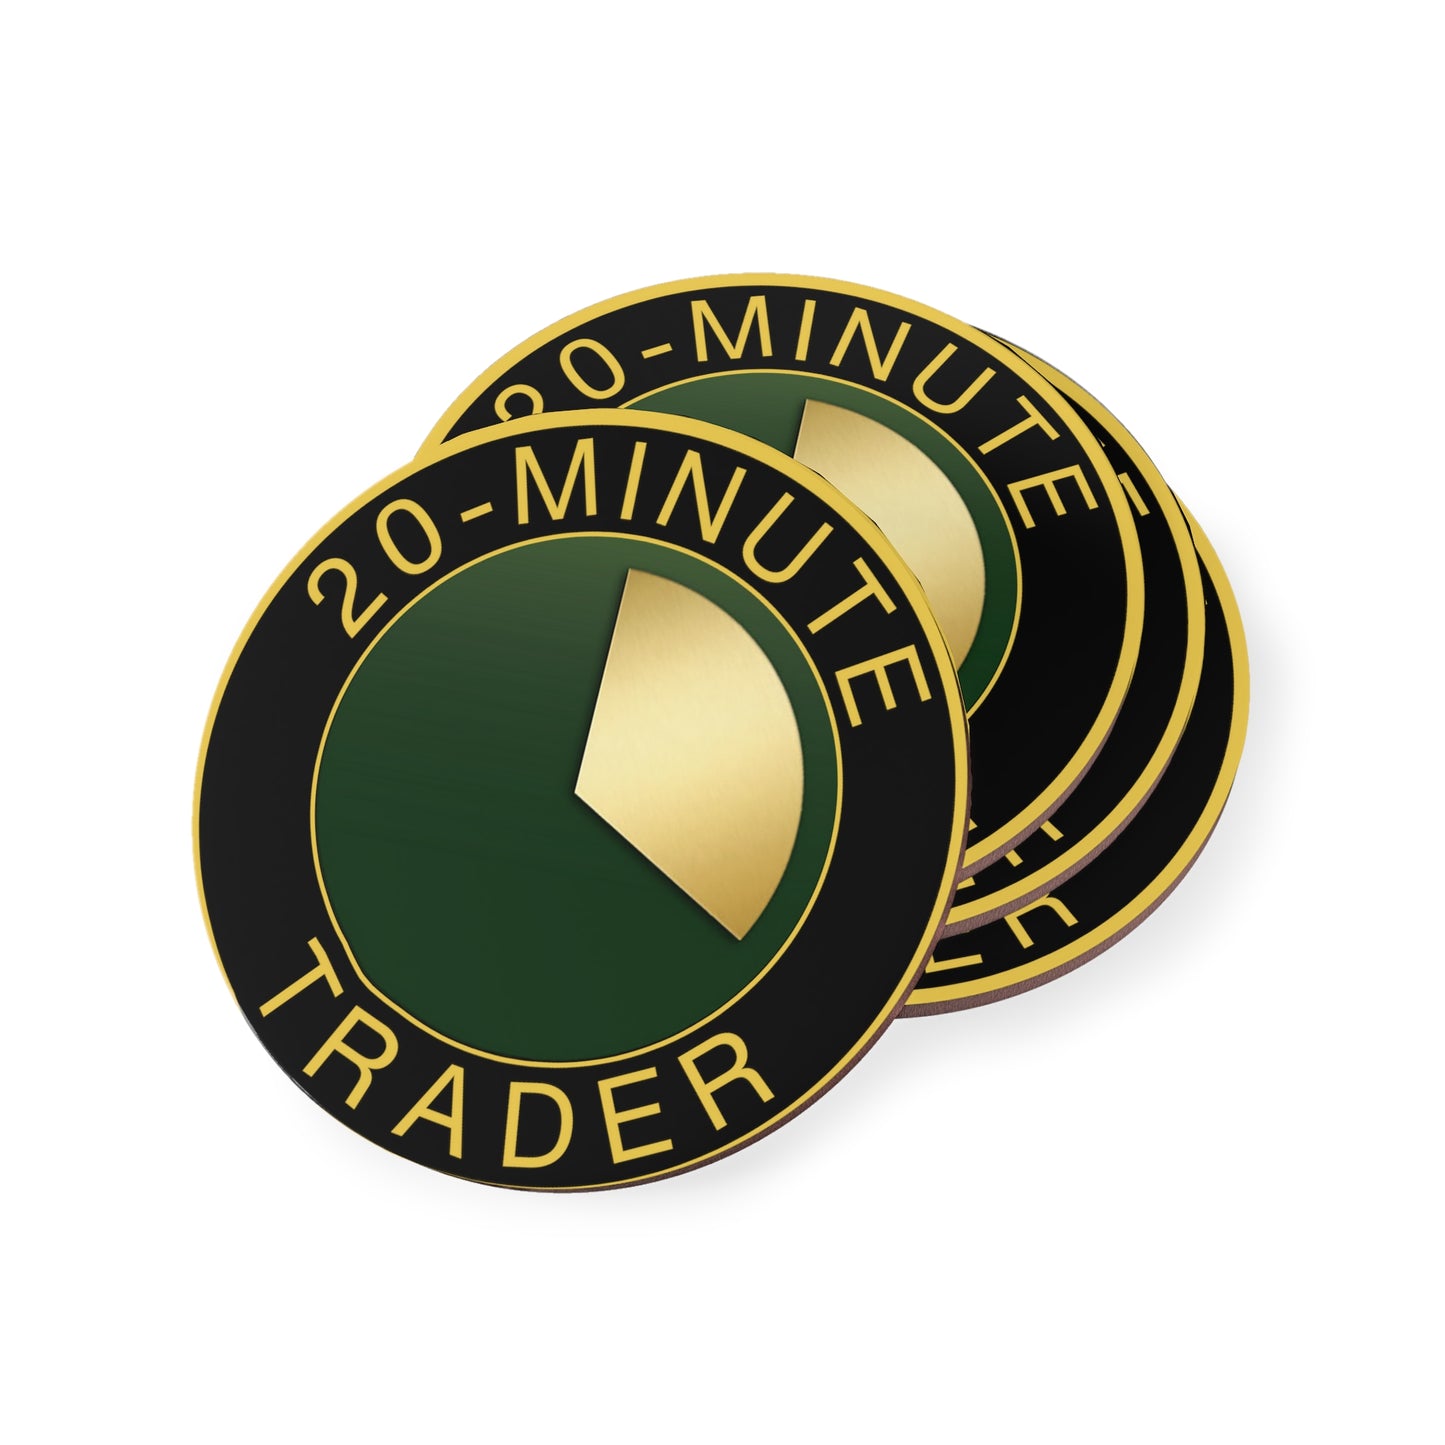 20-Minute Trader® Logo Coasters